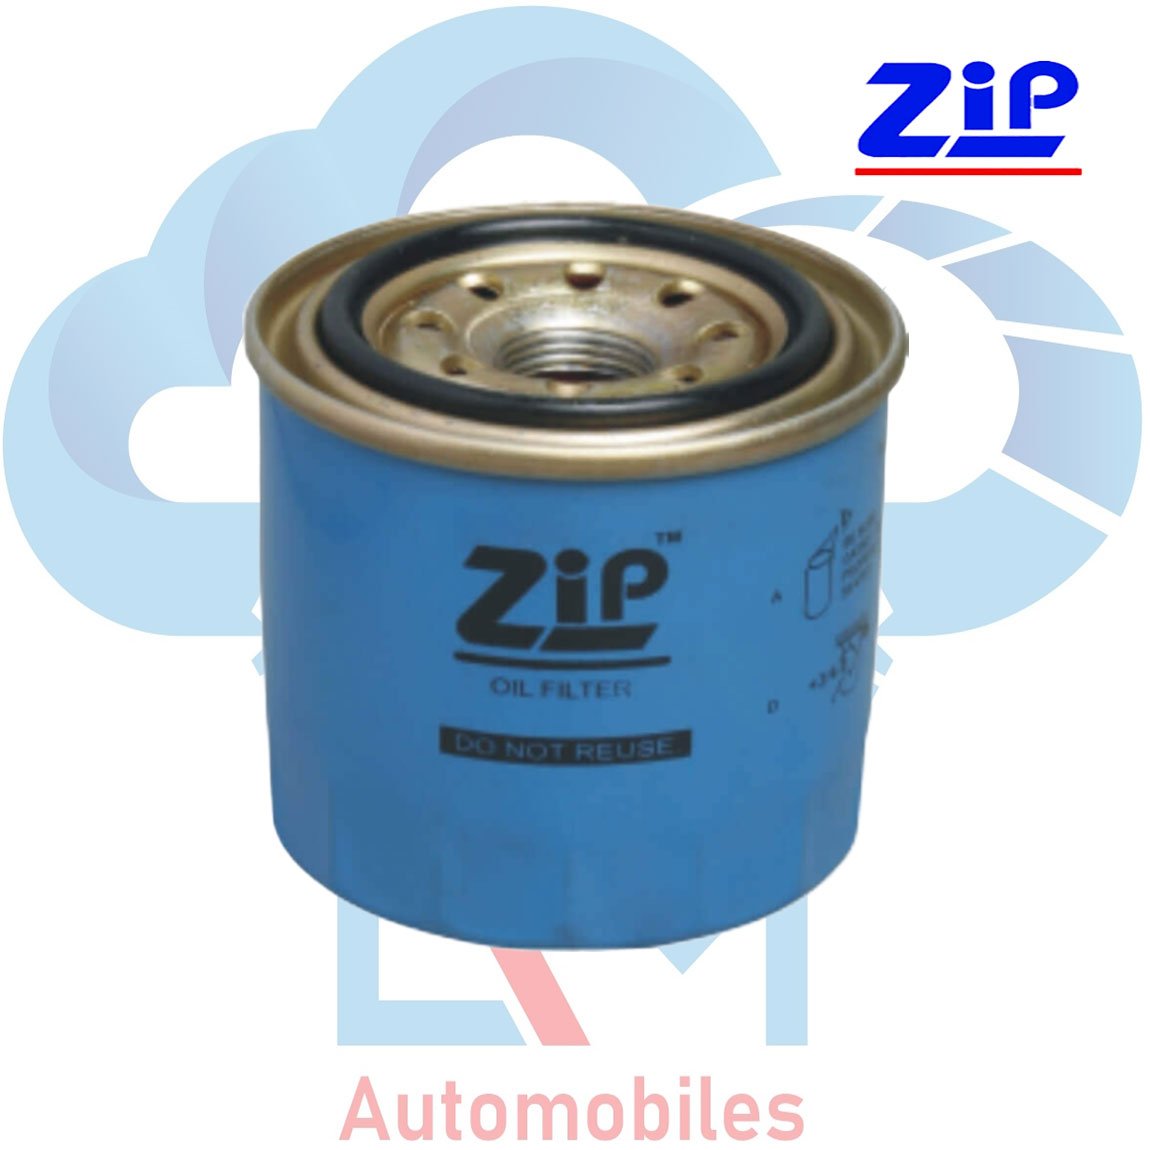 Oil Filter for Honda City in Zip Filter